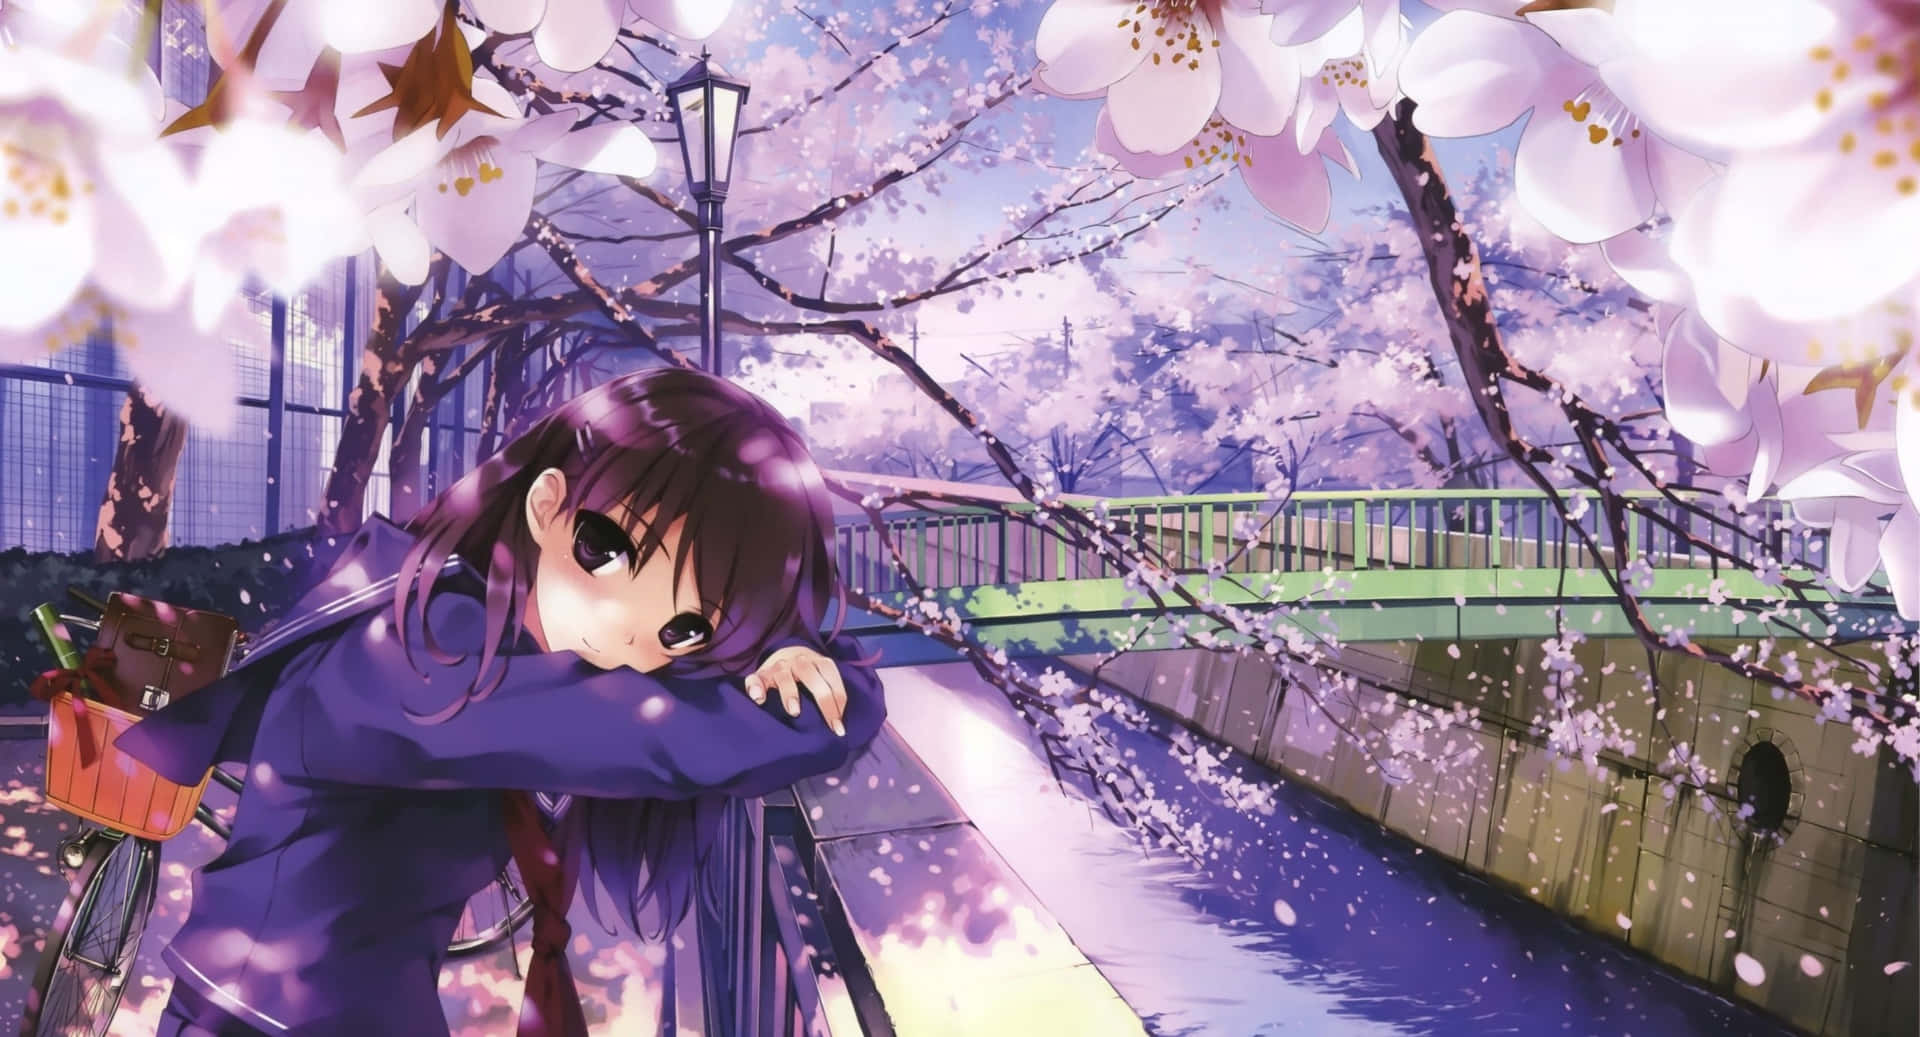 En pige sidder på en bro under kirsebærblomster. Wallpaper